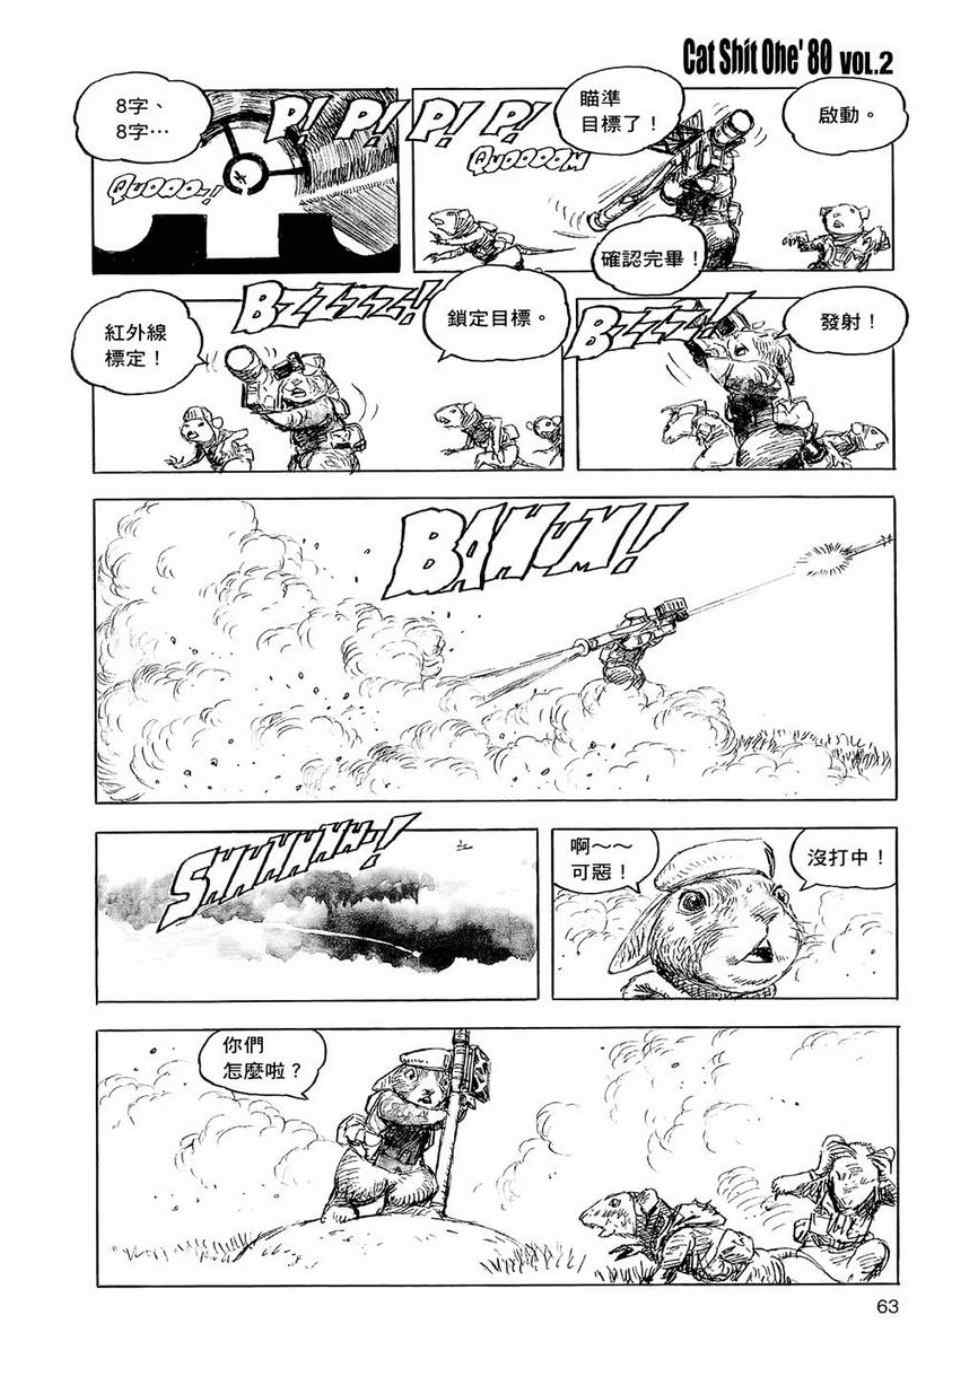 《猫屎一号【CatShitOne80】》漫画 02卷